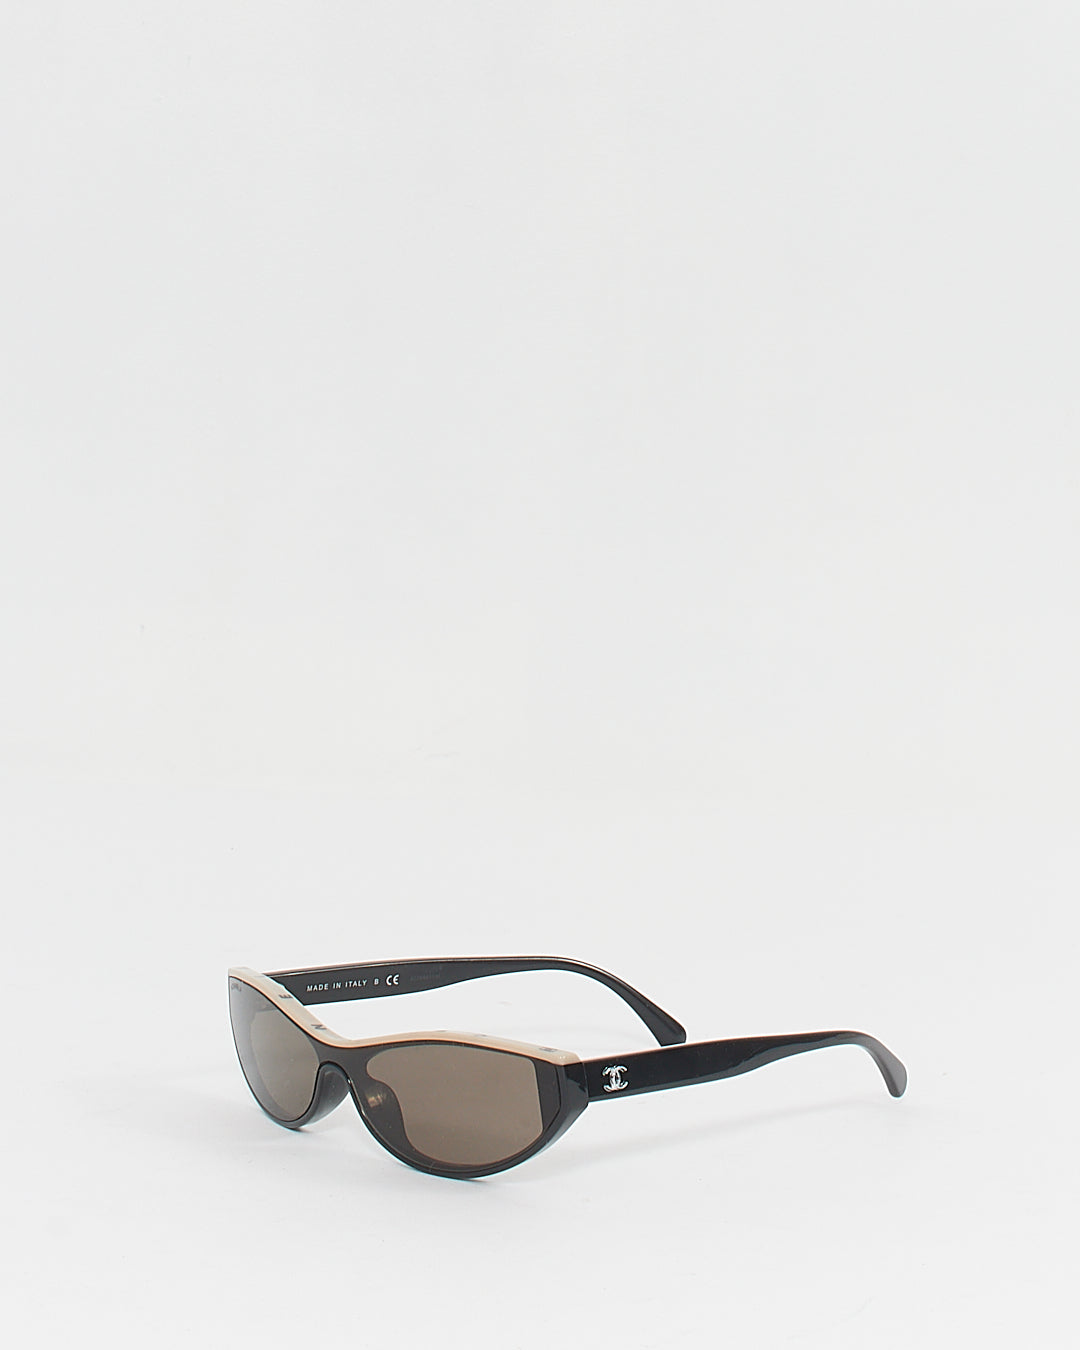 Chanel Black/Beige Acetate Oval 5415-A Sunglasses